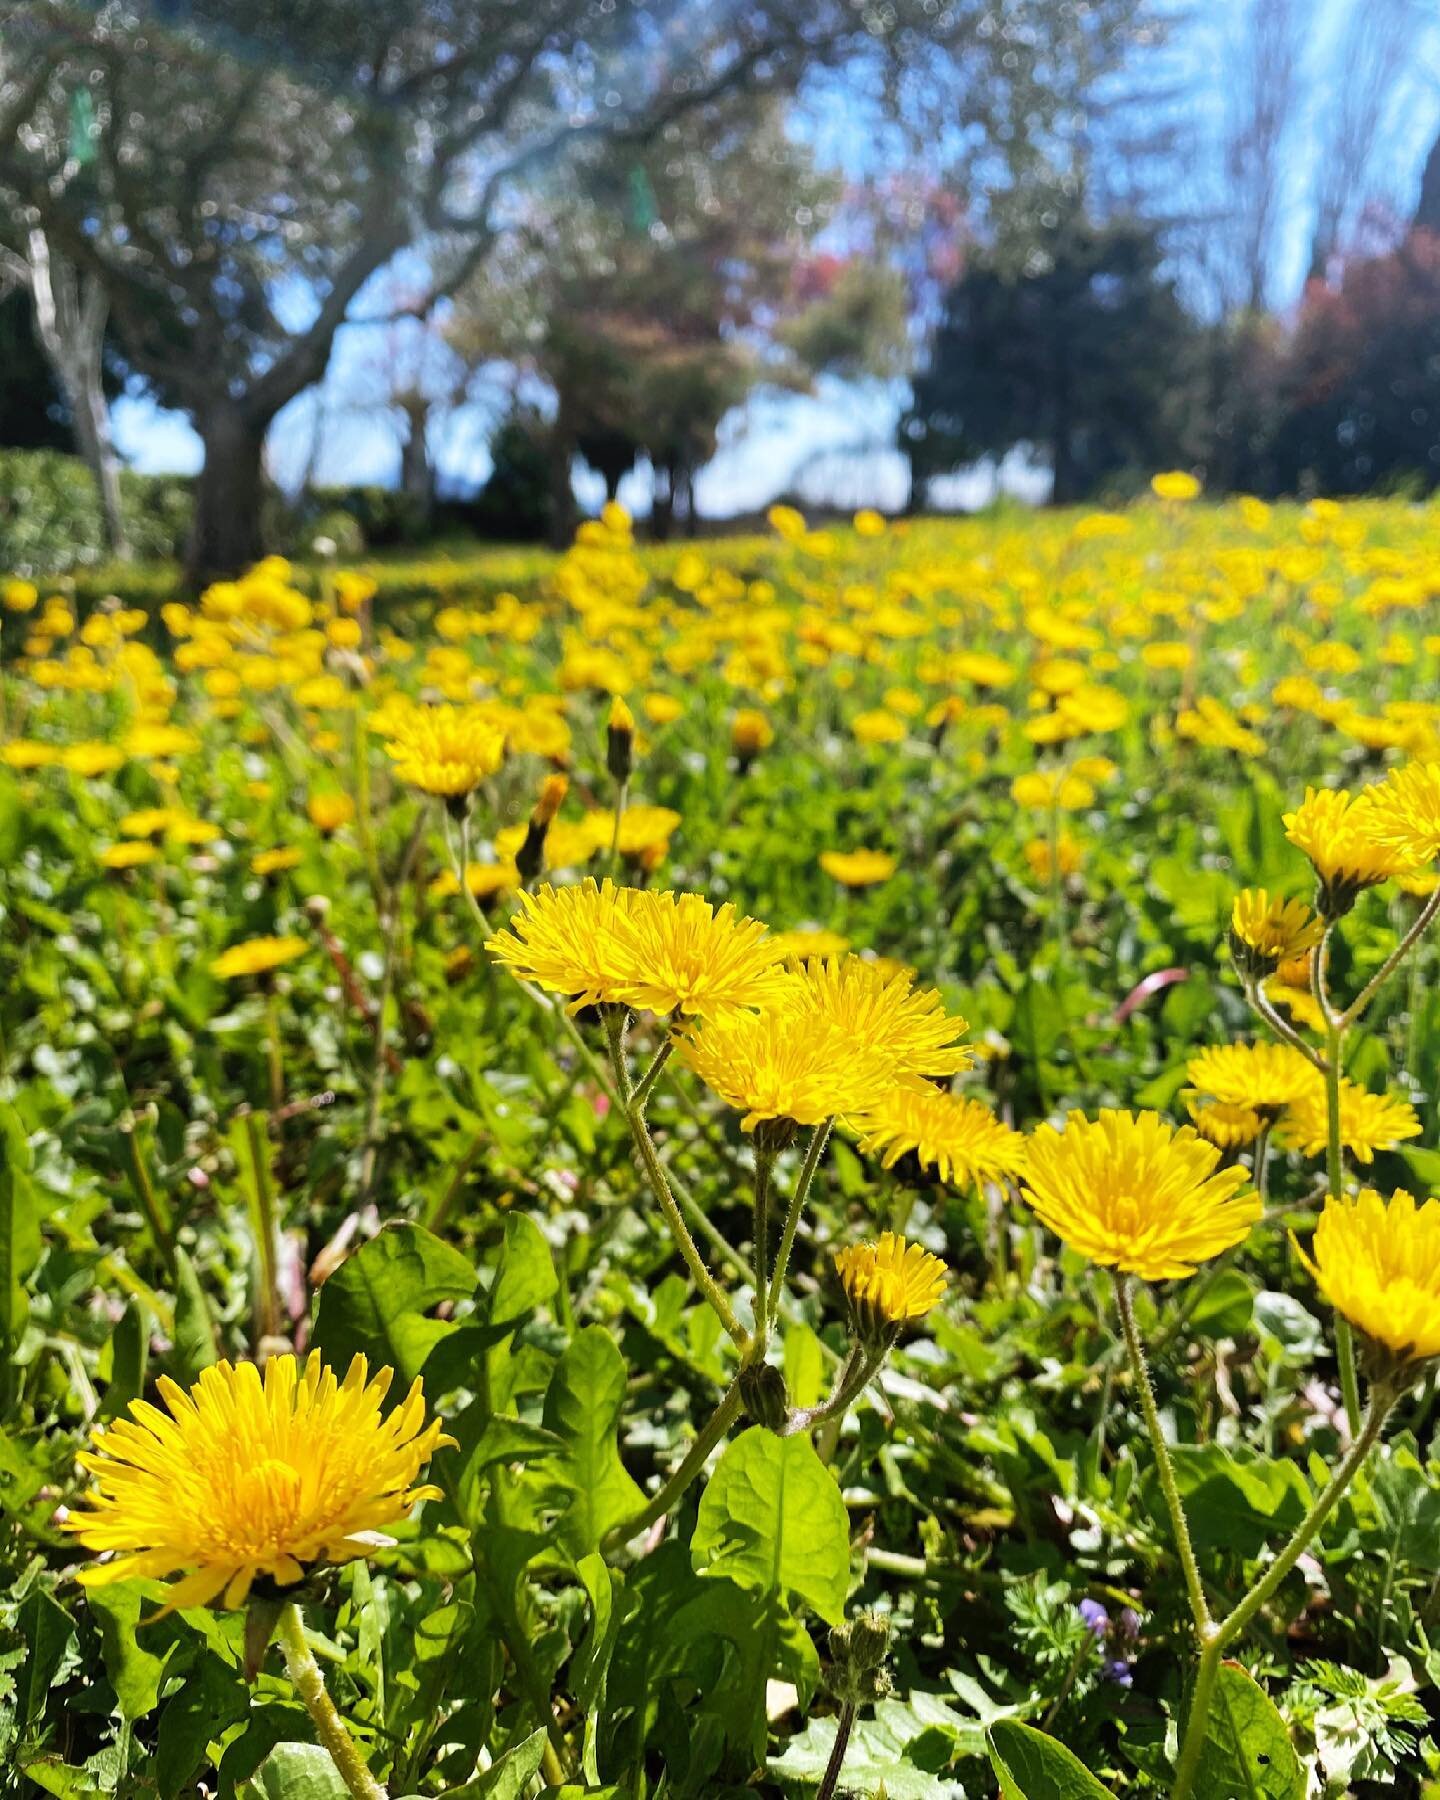 |Dandelion is the new sunshine| 

#yellow #spring2021 #sunshineblueskies #provence #nature #pissenlit #dandelion #jaunepoussin #naturopathie #naturopathe